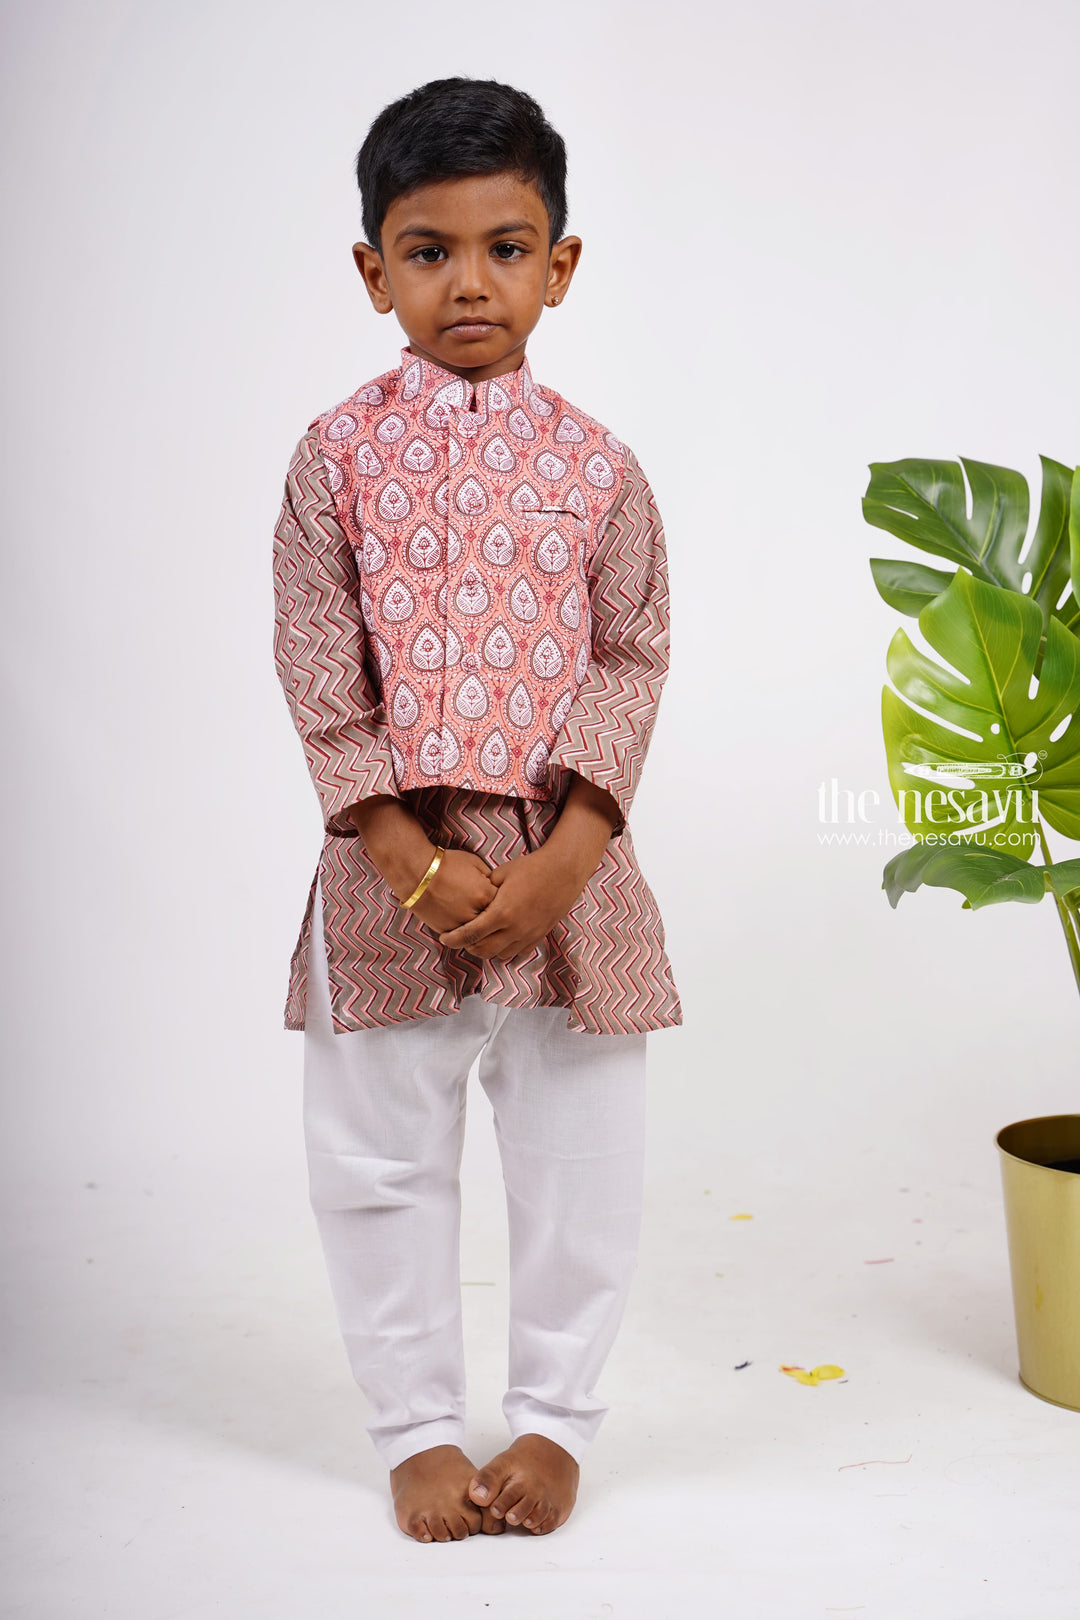 The Nesavu Boys Jacket Sets Ajrak Block Printed Kurtha with Printed Jacket Pant Set for Boys Nesavu 16 (1Y) / Brown BES80-16 Stylish Party Wear Kurta For Boys | Designer Ethnics | The Nesavu